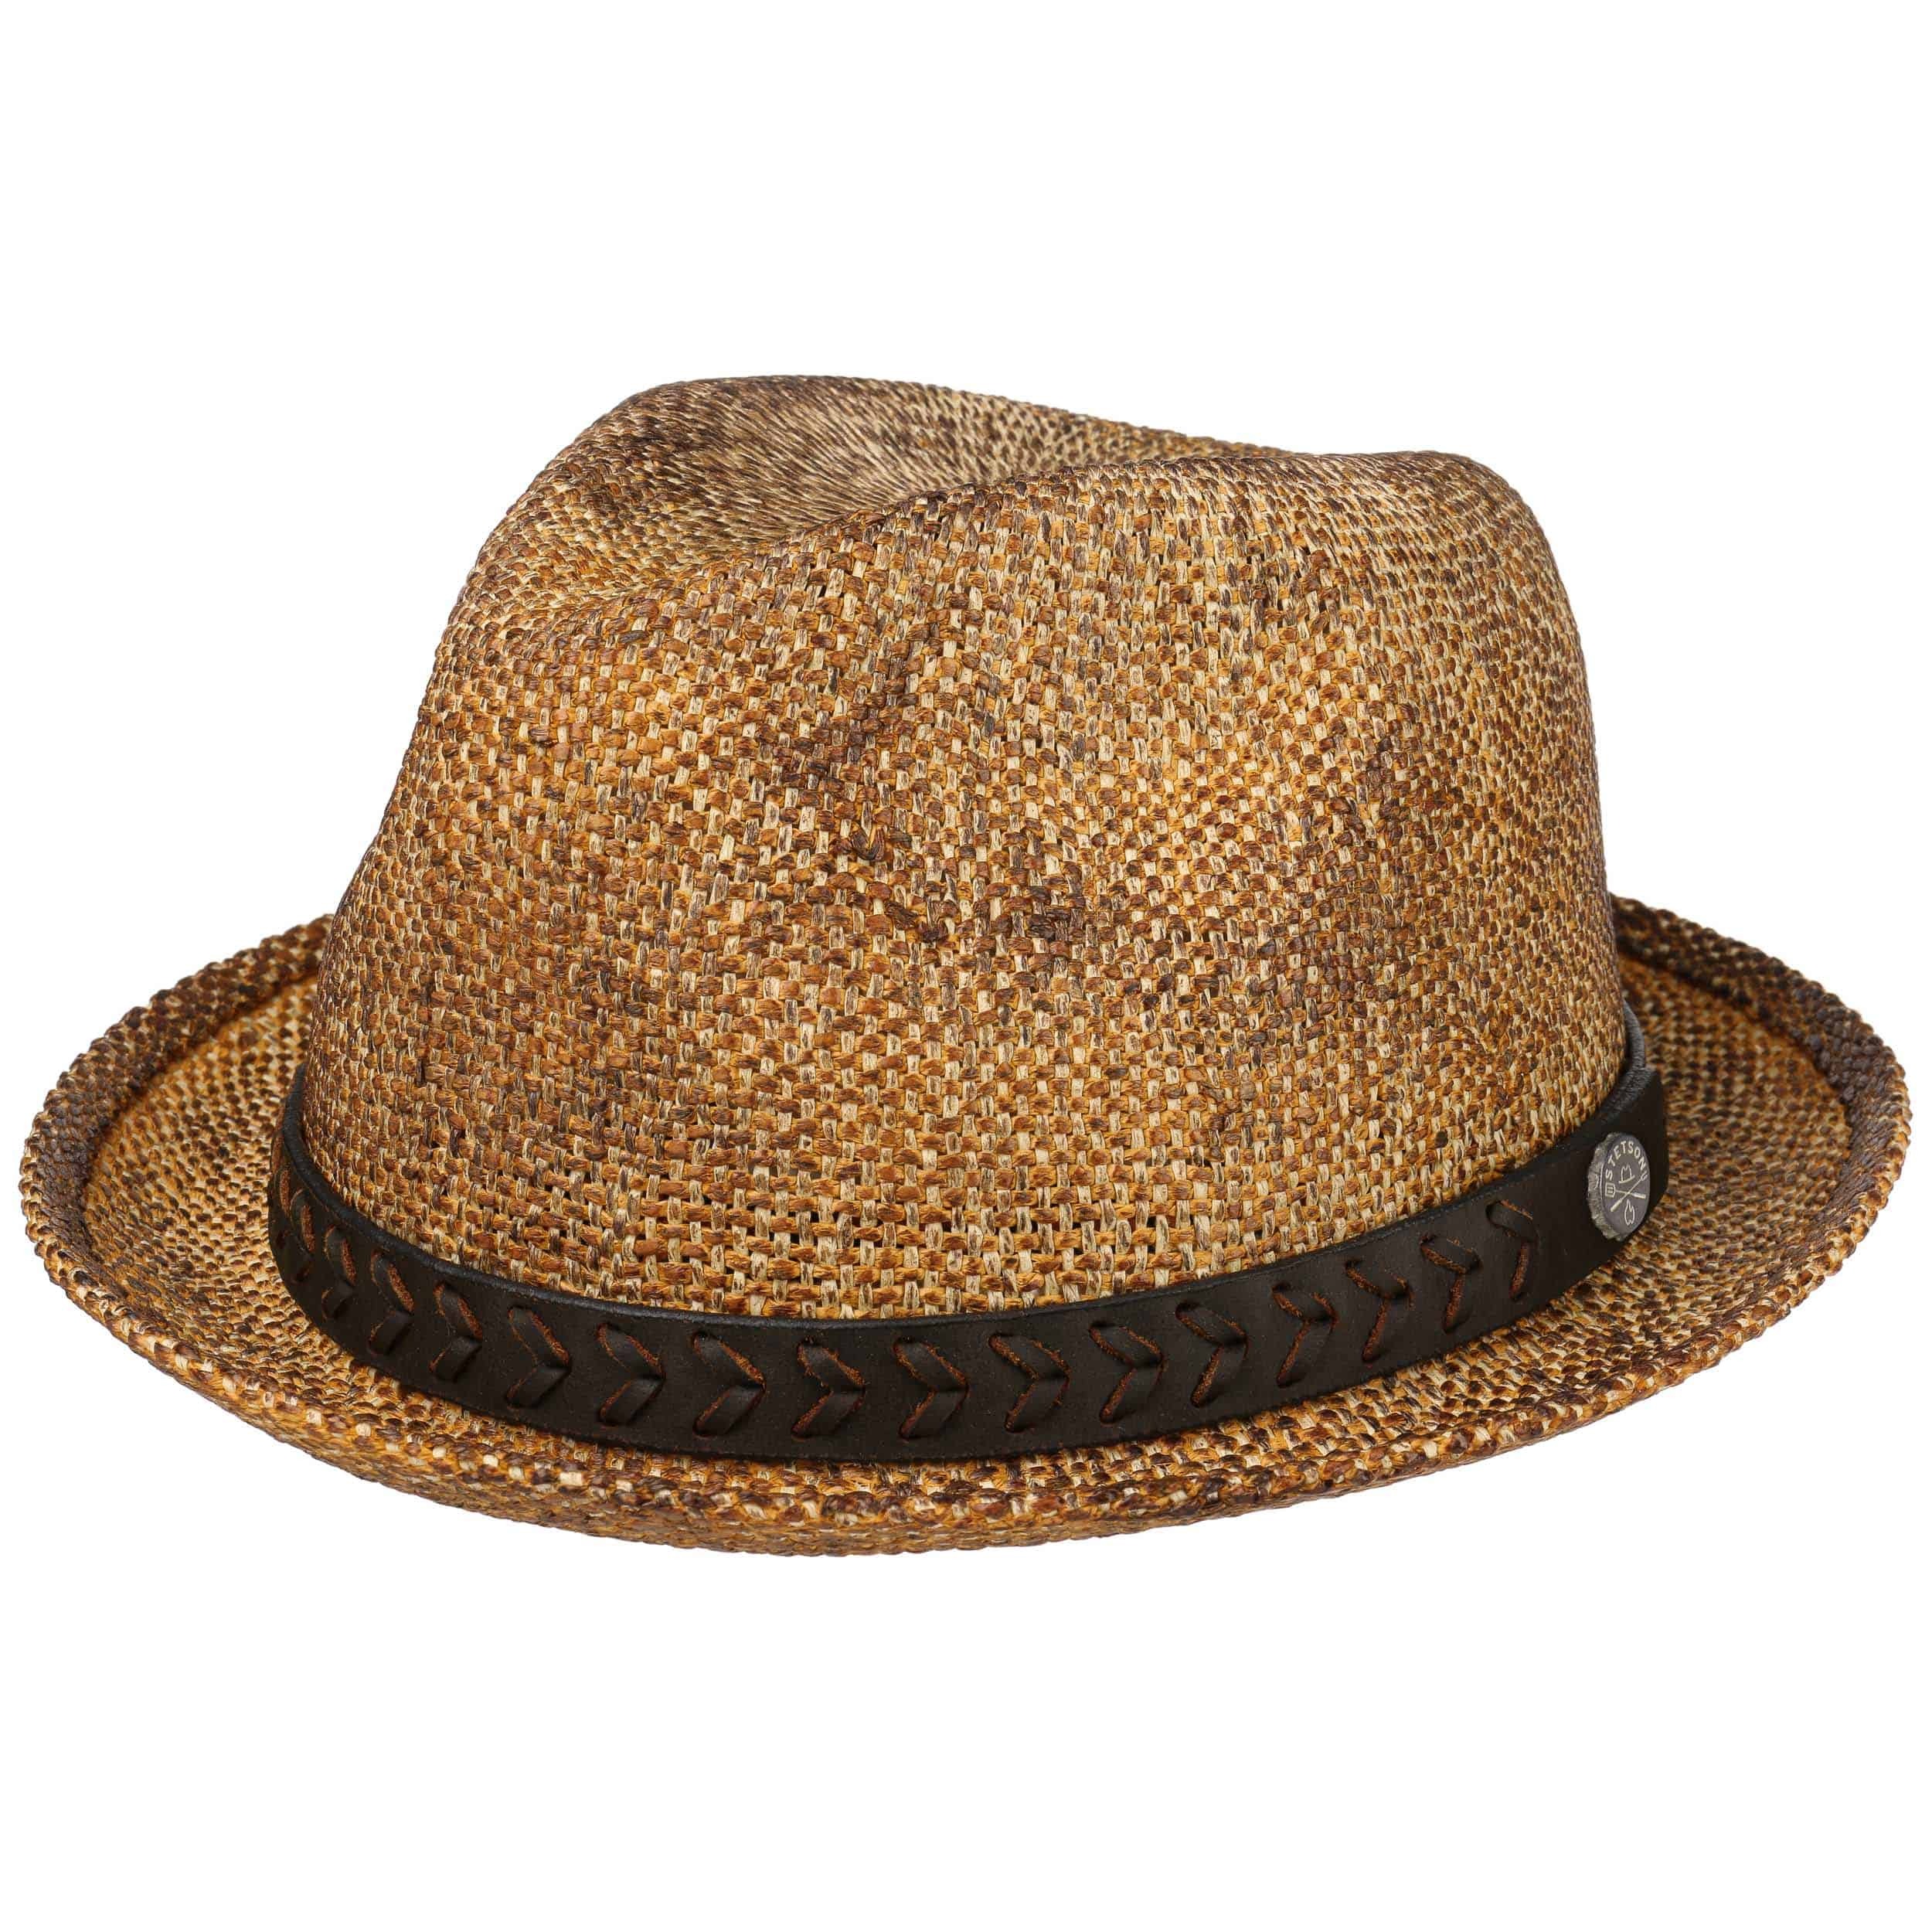 BBQ Toyo Player Hat Straw Hat by Stetson - 79,00